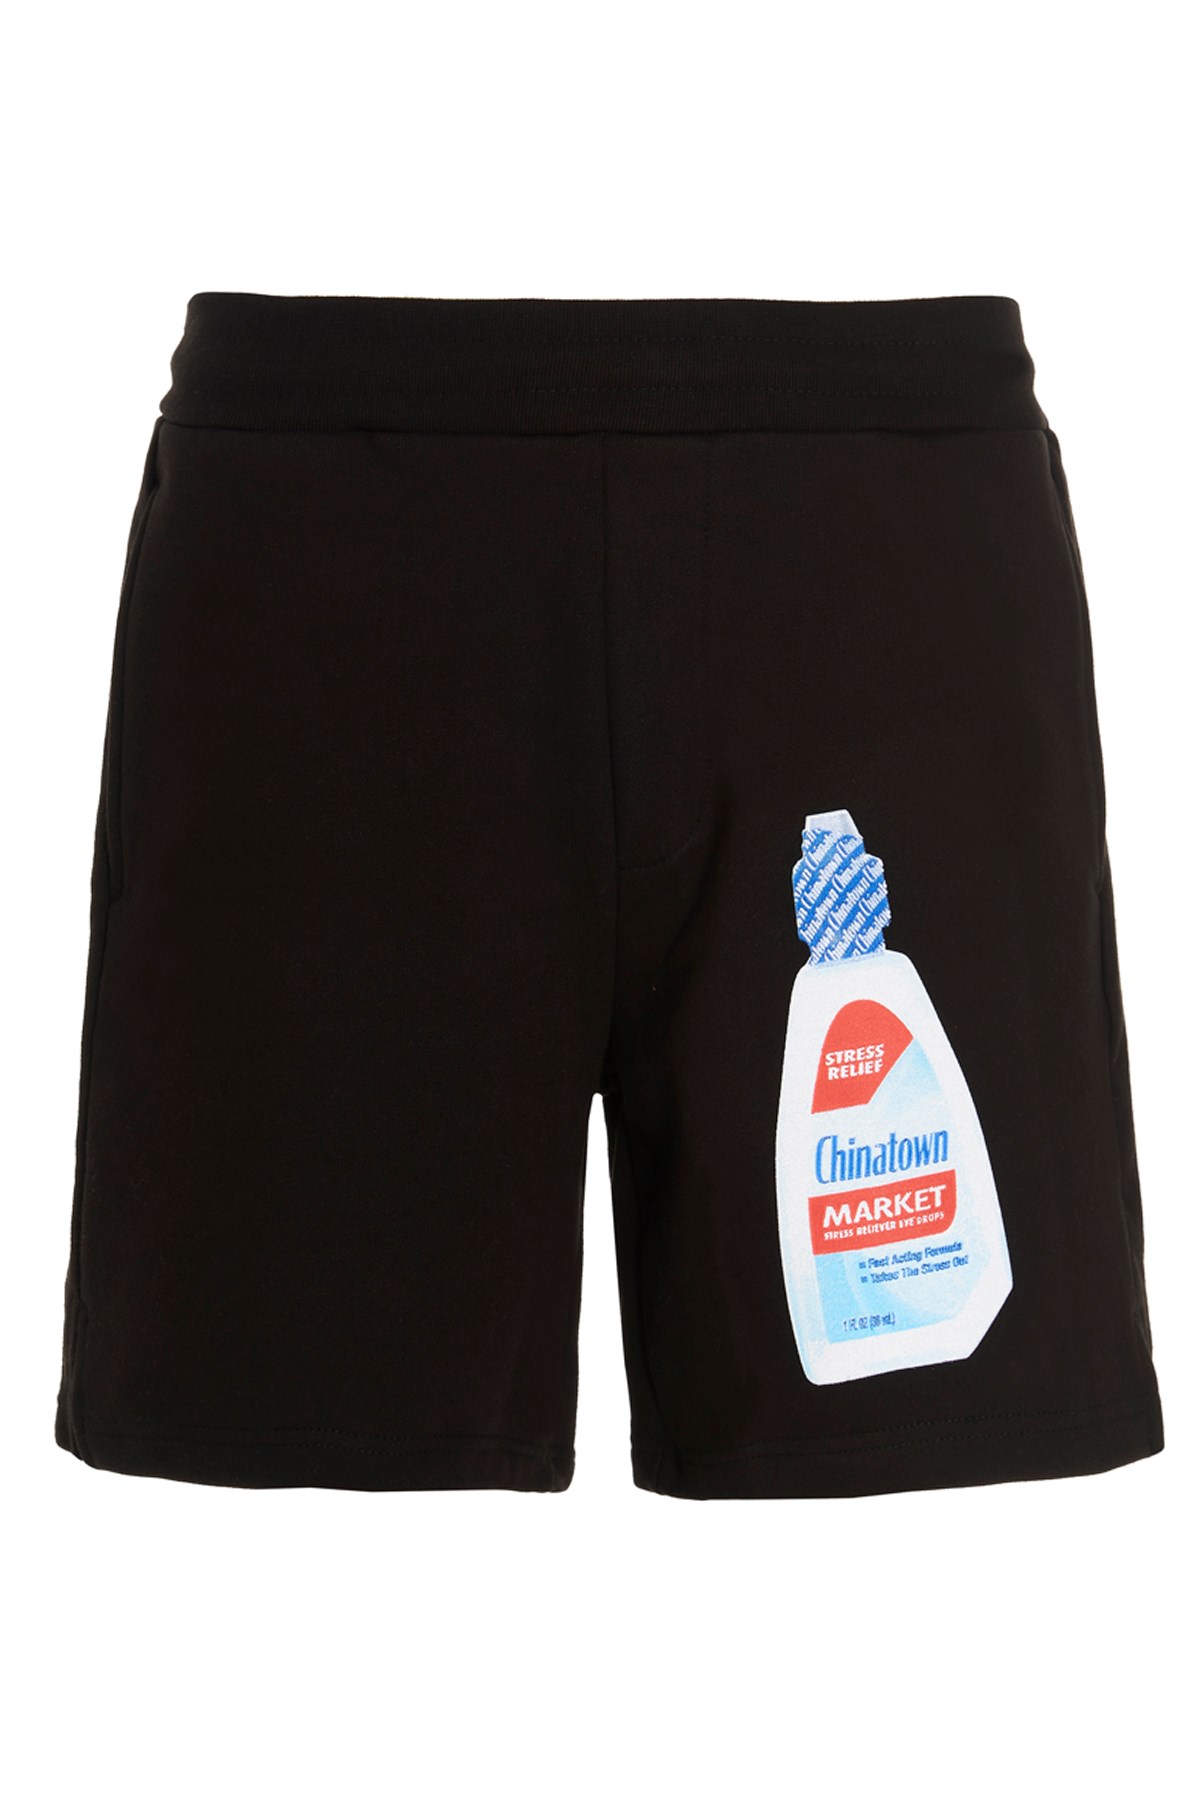 CHINATOWN MARKET Q2 Capsule Shorts